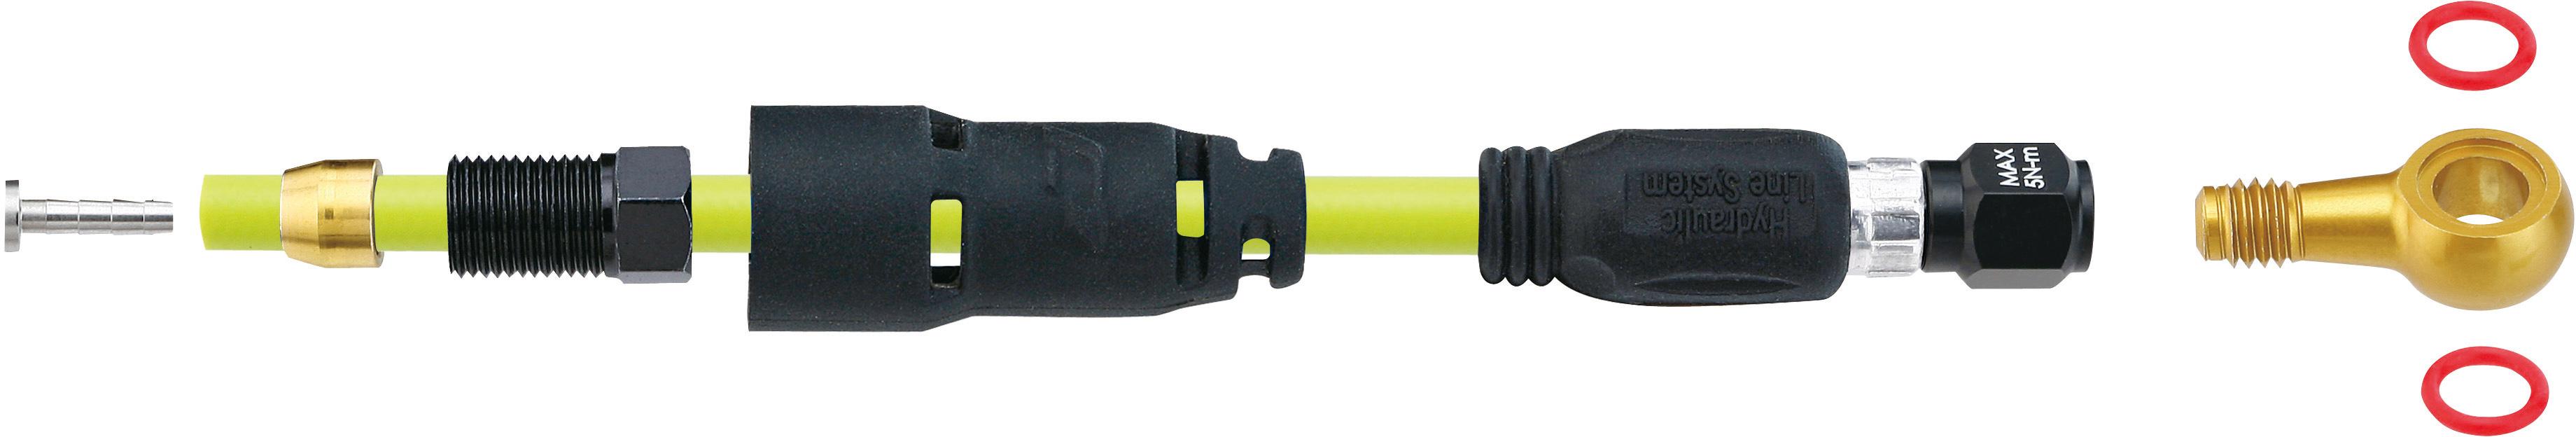 Jagwire Pro Quick-fit Adaptor Kit - Shimano - Black